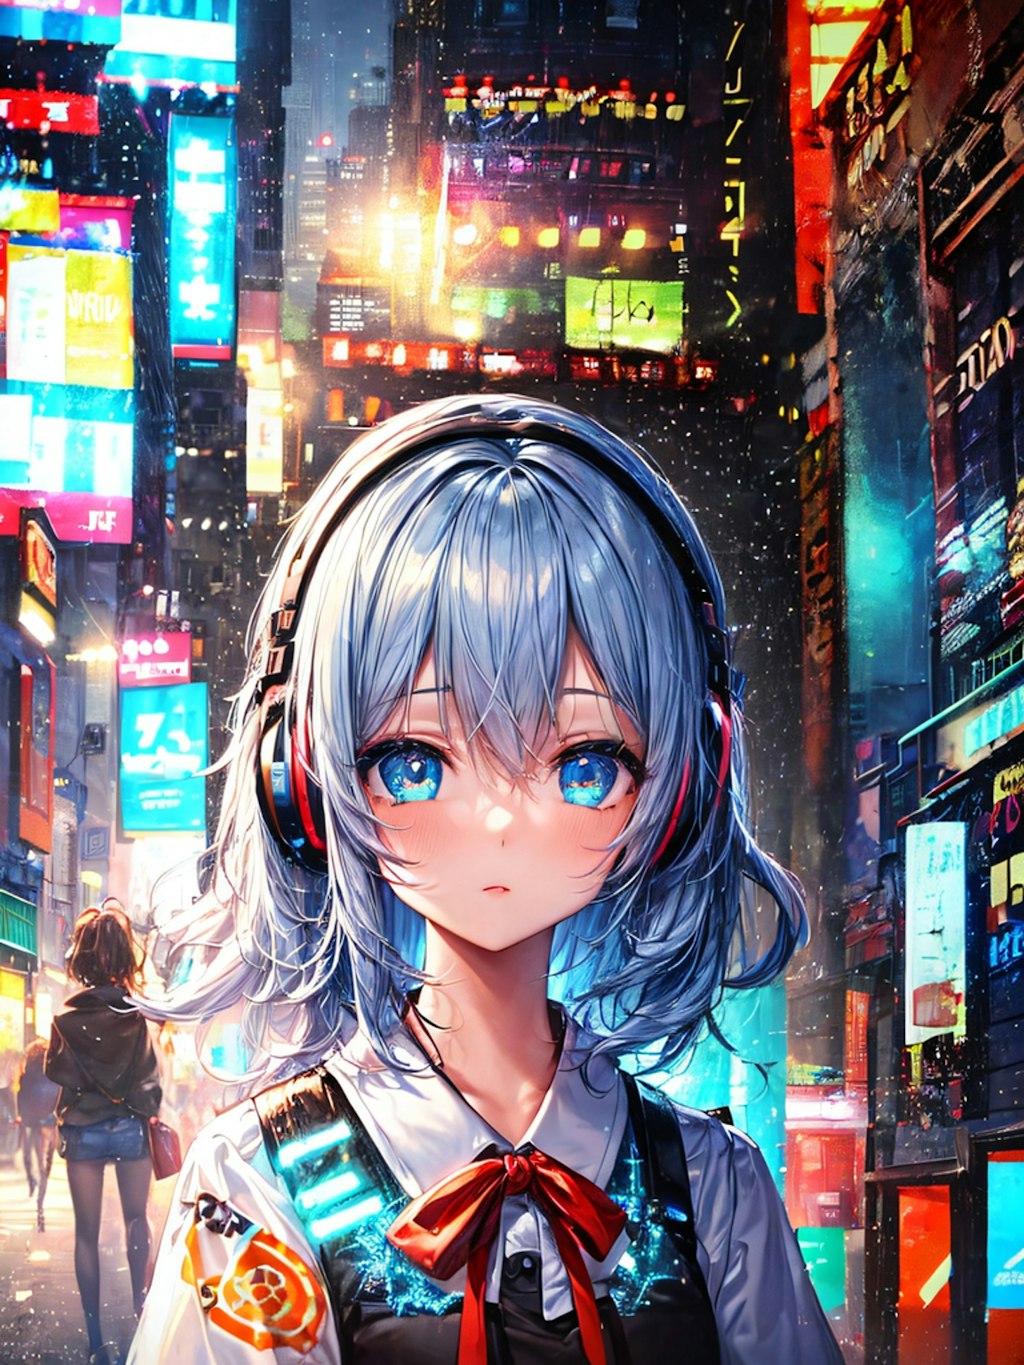 Neo Osaka Headphone Girl 23-27